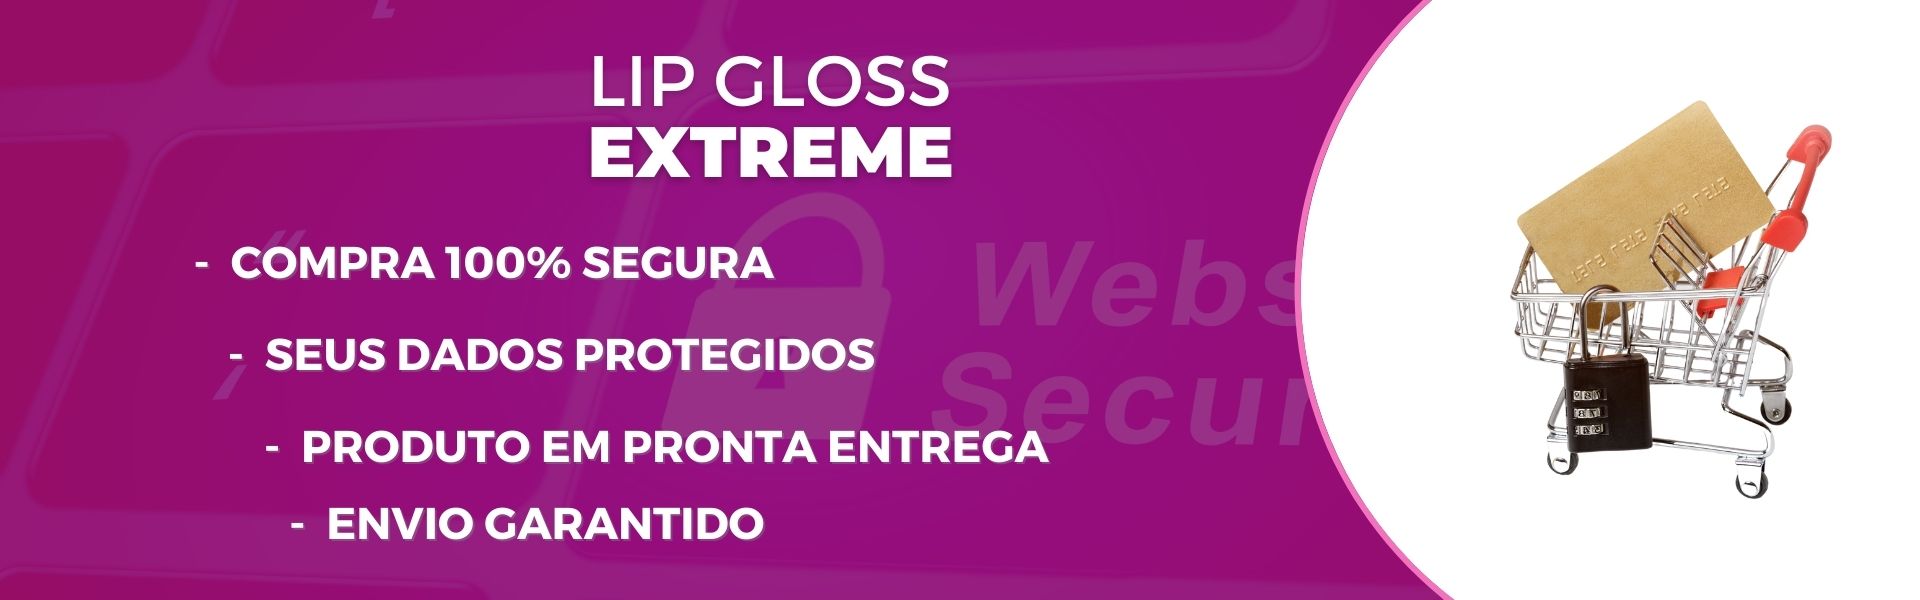 lip-gloss-xtreme-vital-flora-banner-compra-segura